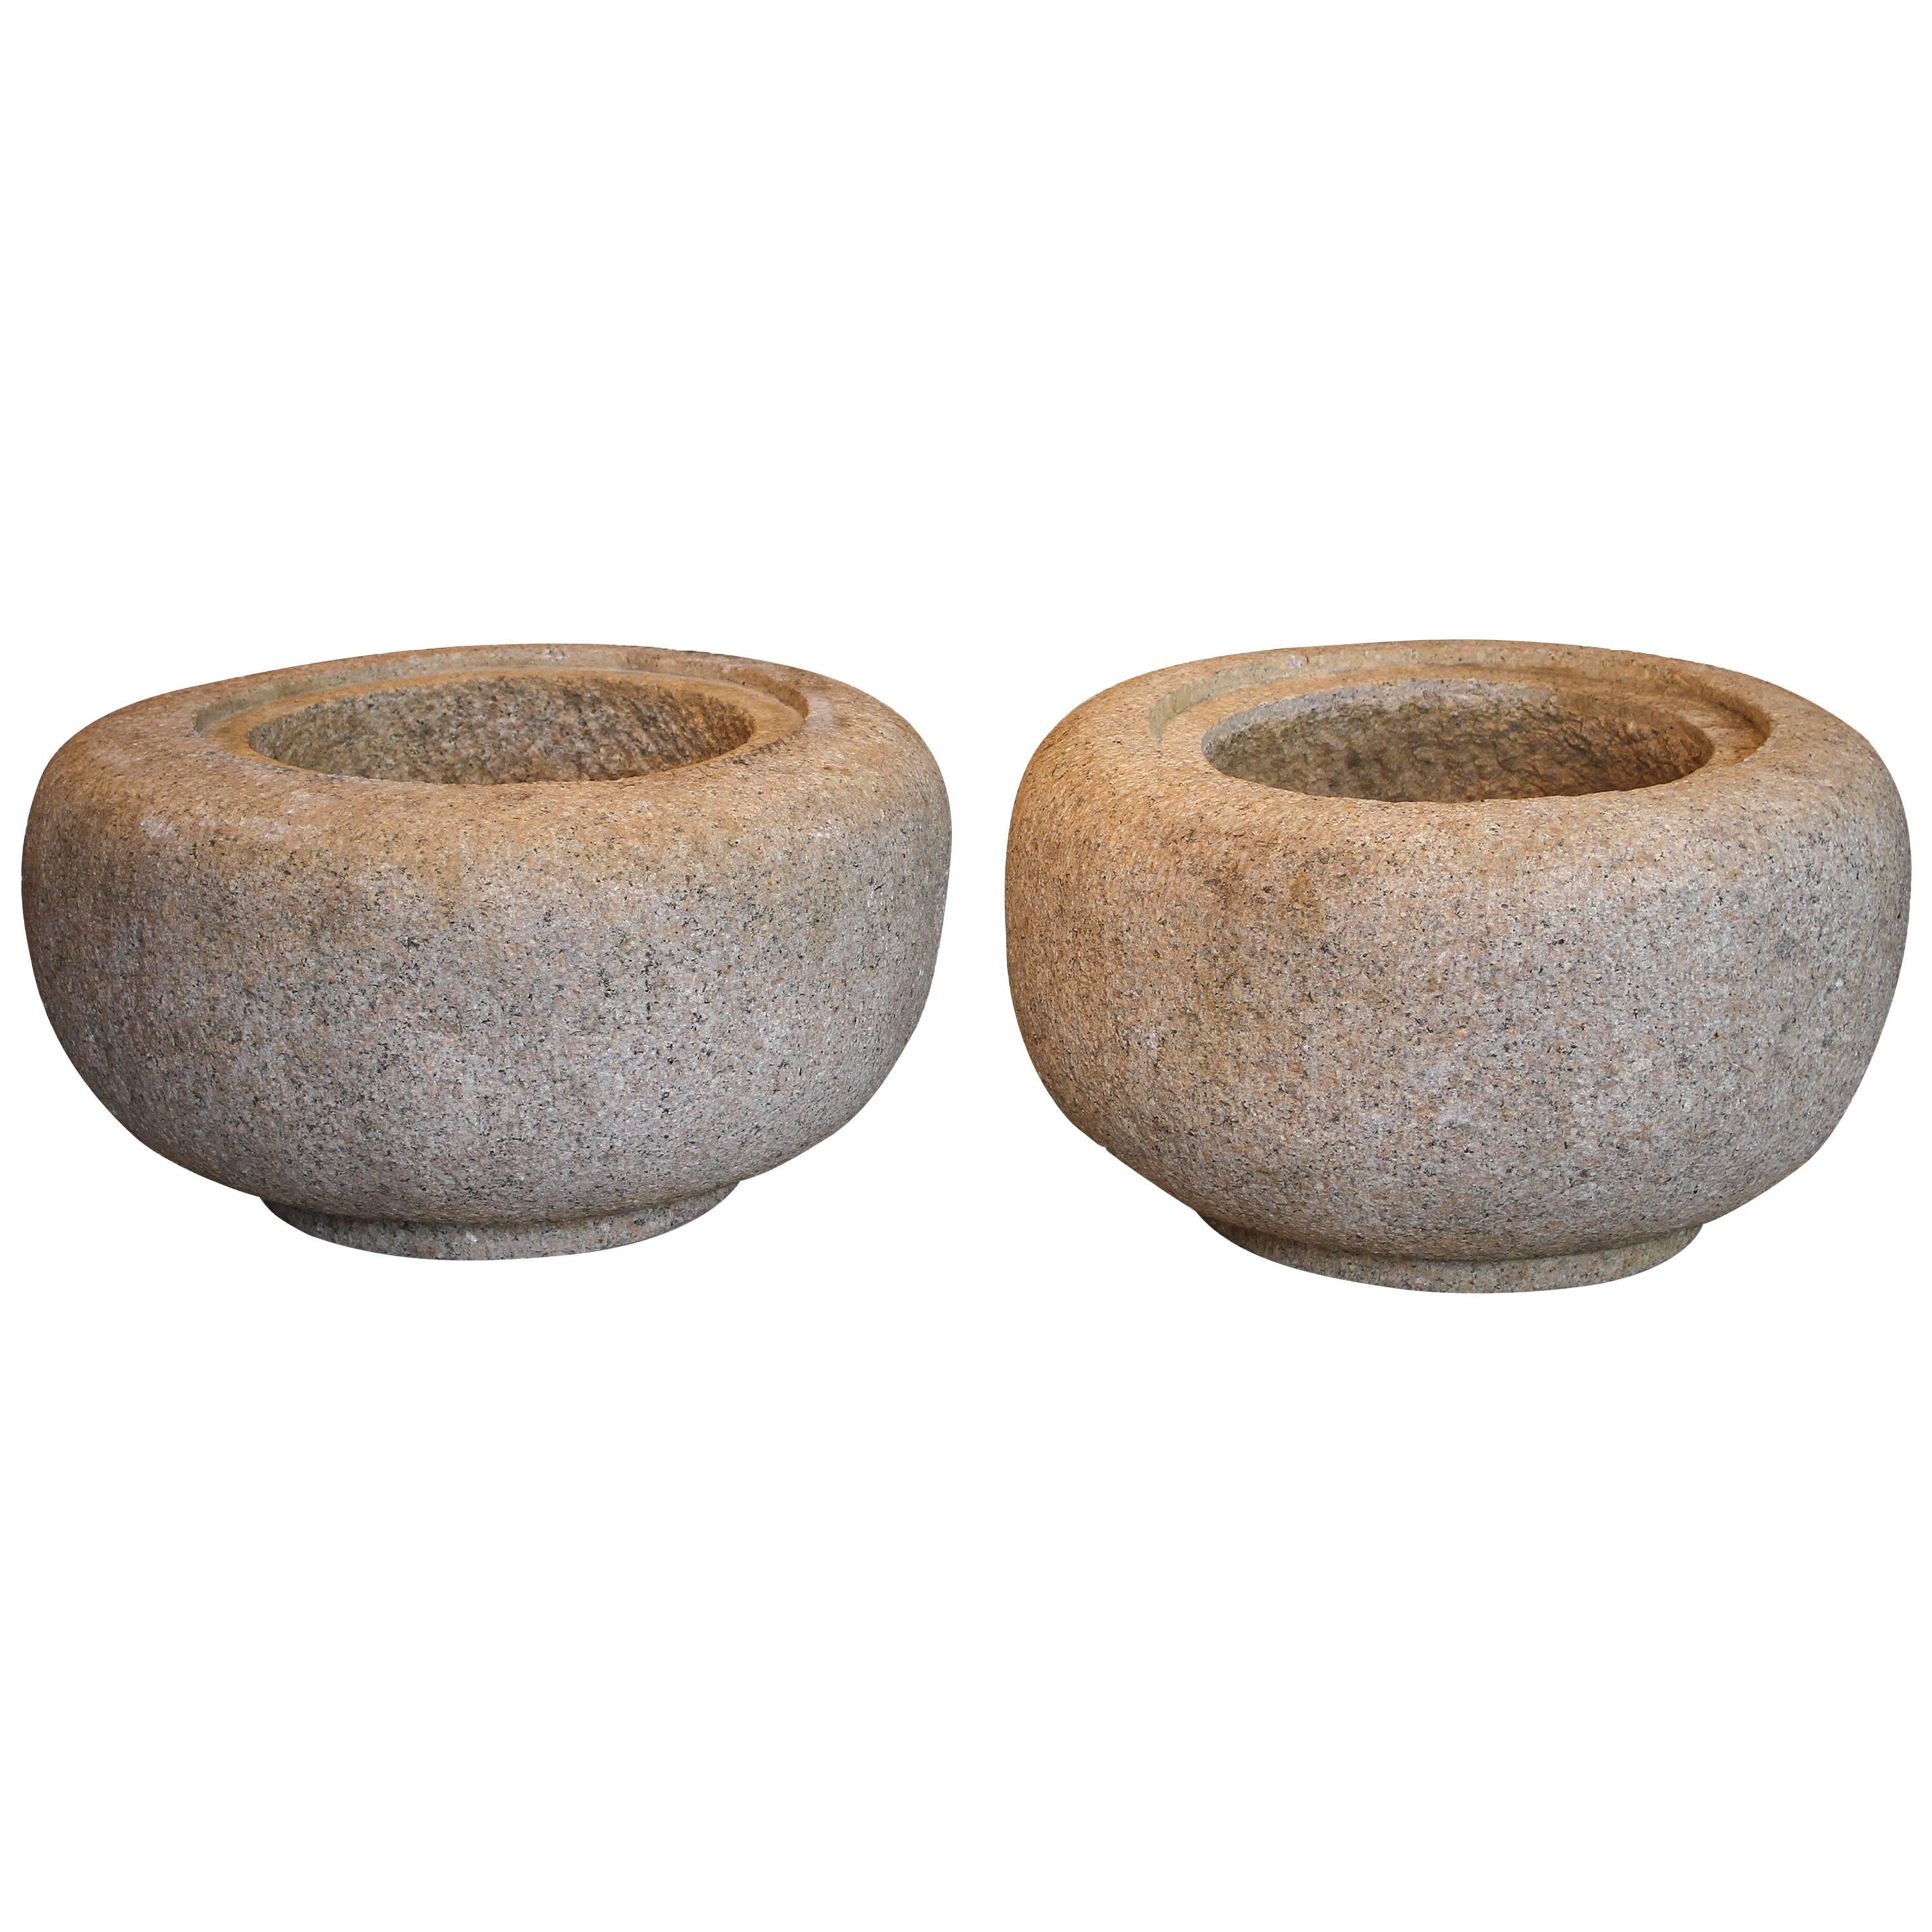 Fantastic Pair of Solid Granite GArden Planter Bowls